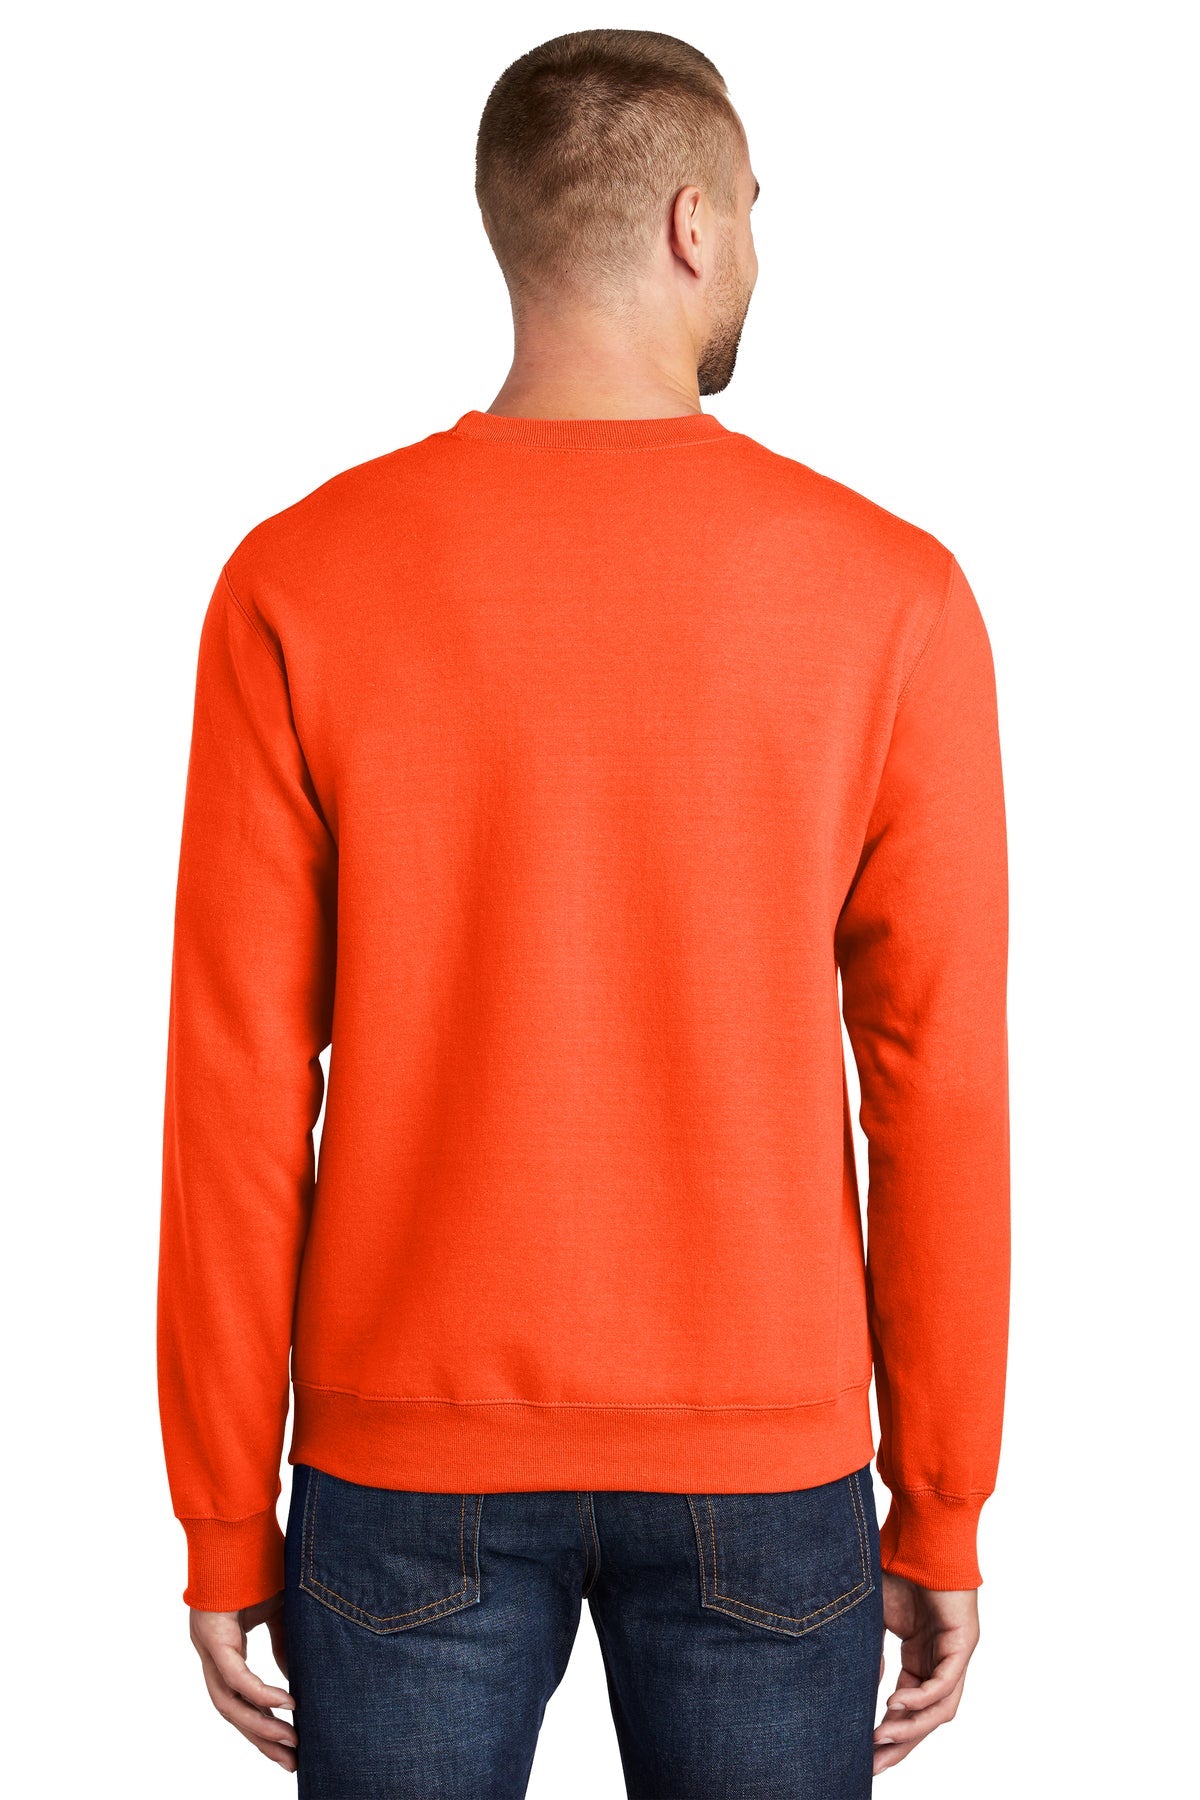 port & company_pc90 _safety orange_company_logo_sweatshirts